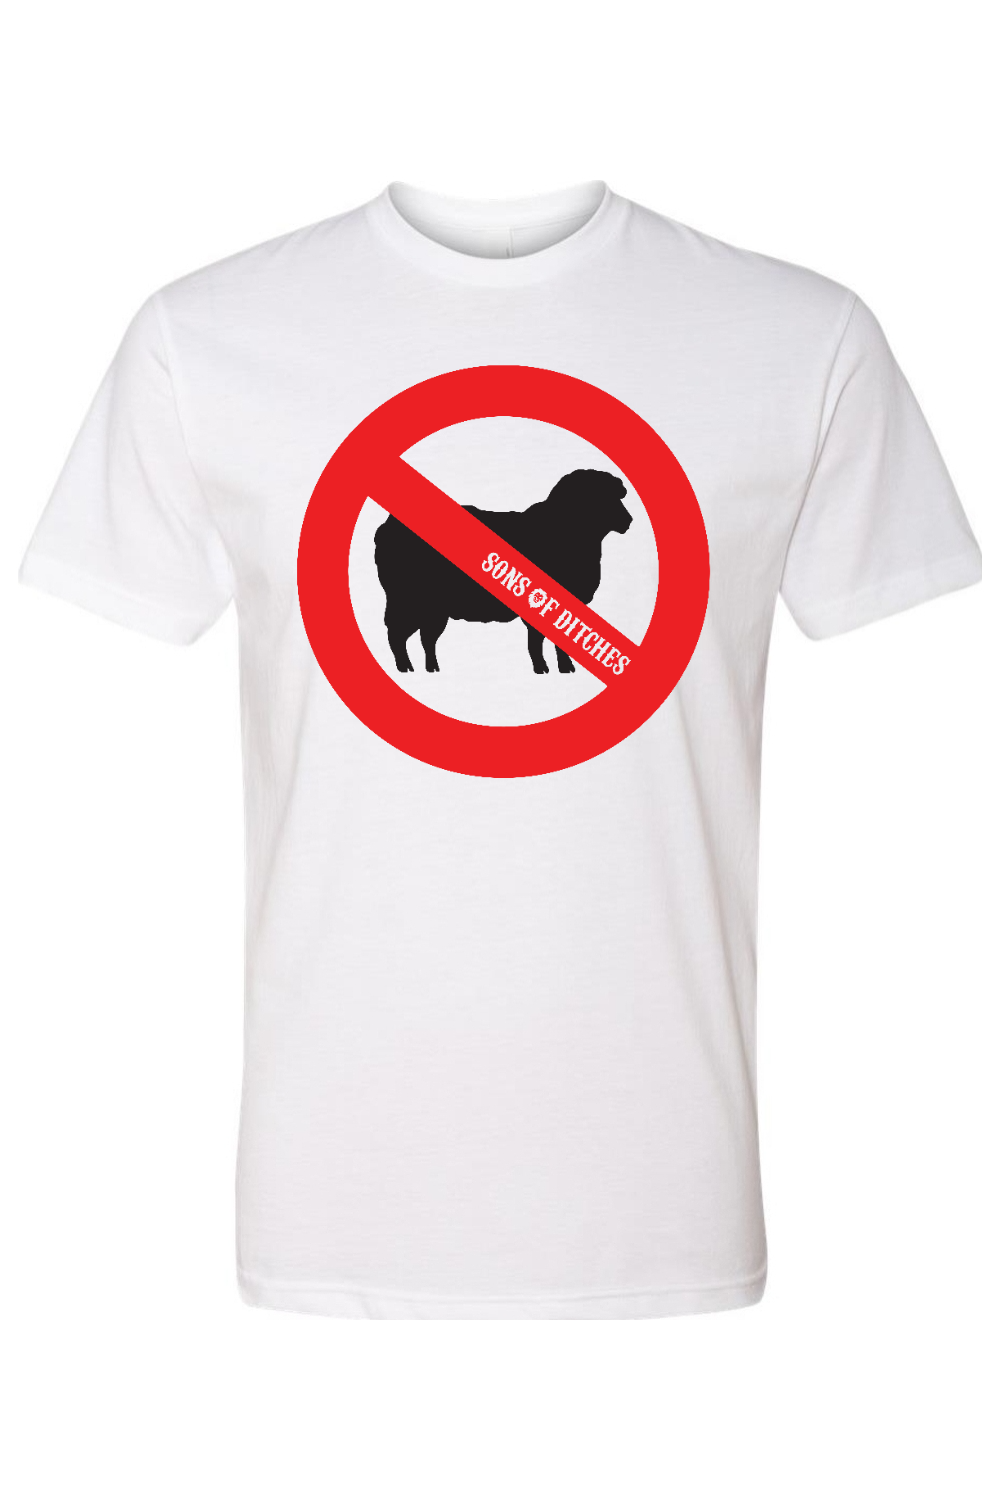 New No Sheep T-shirt - White